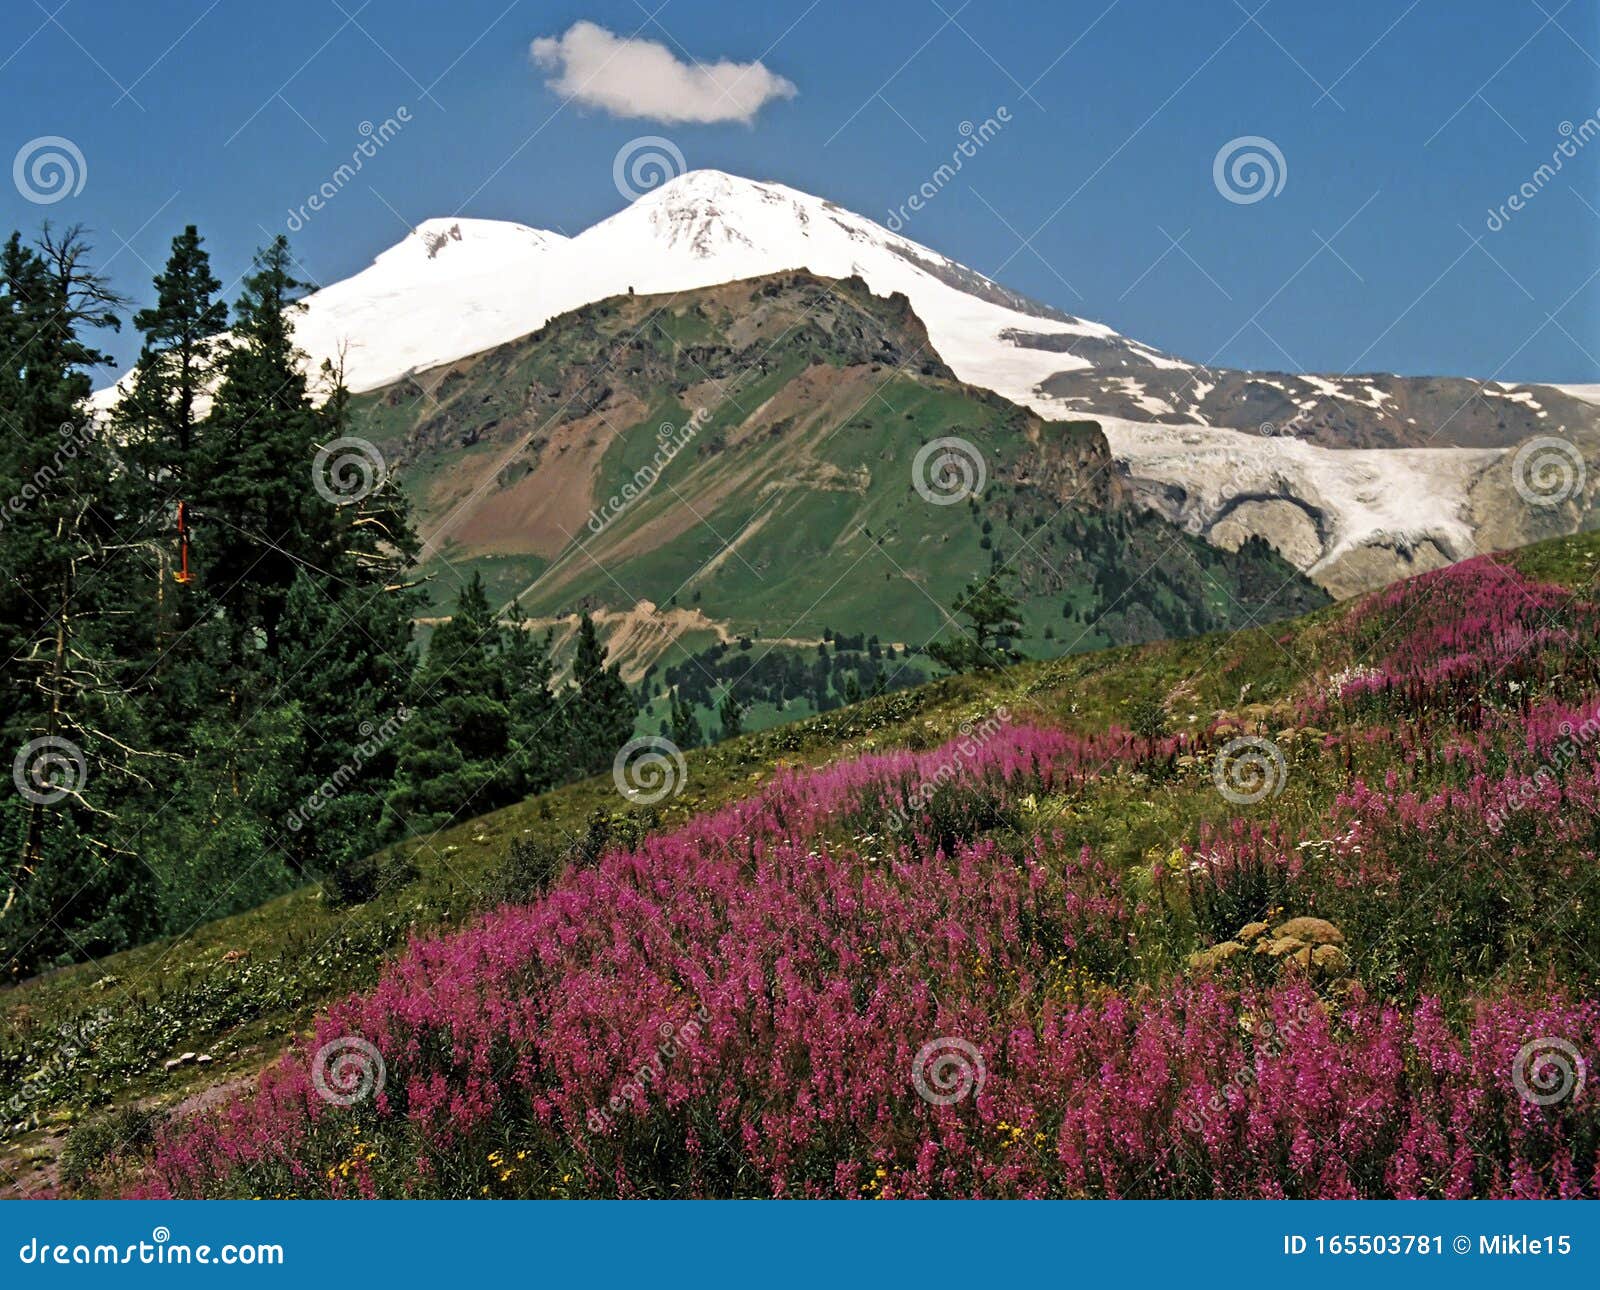 elbrus - a stratovolcano in the central caucasus